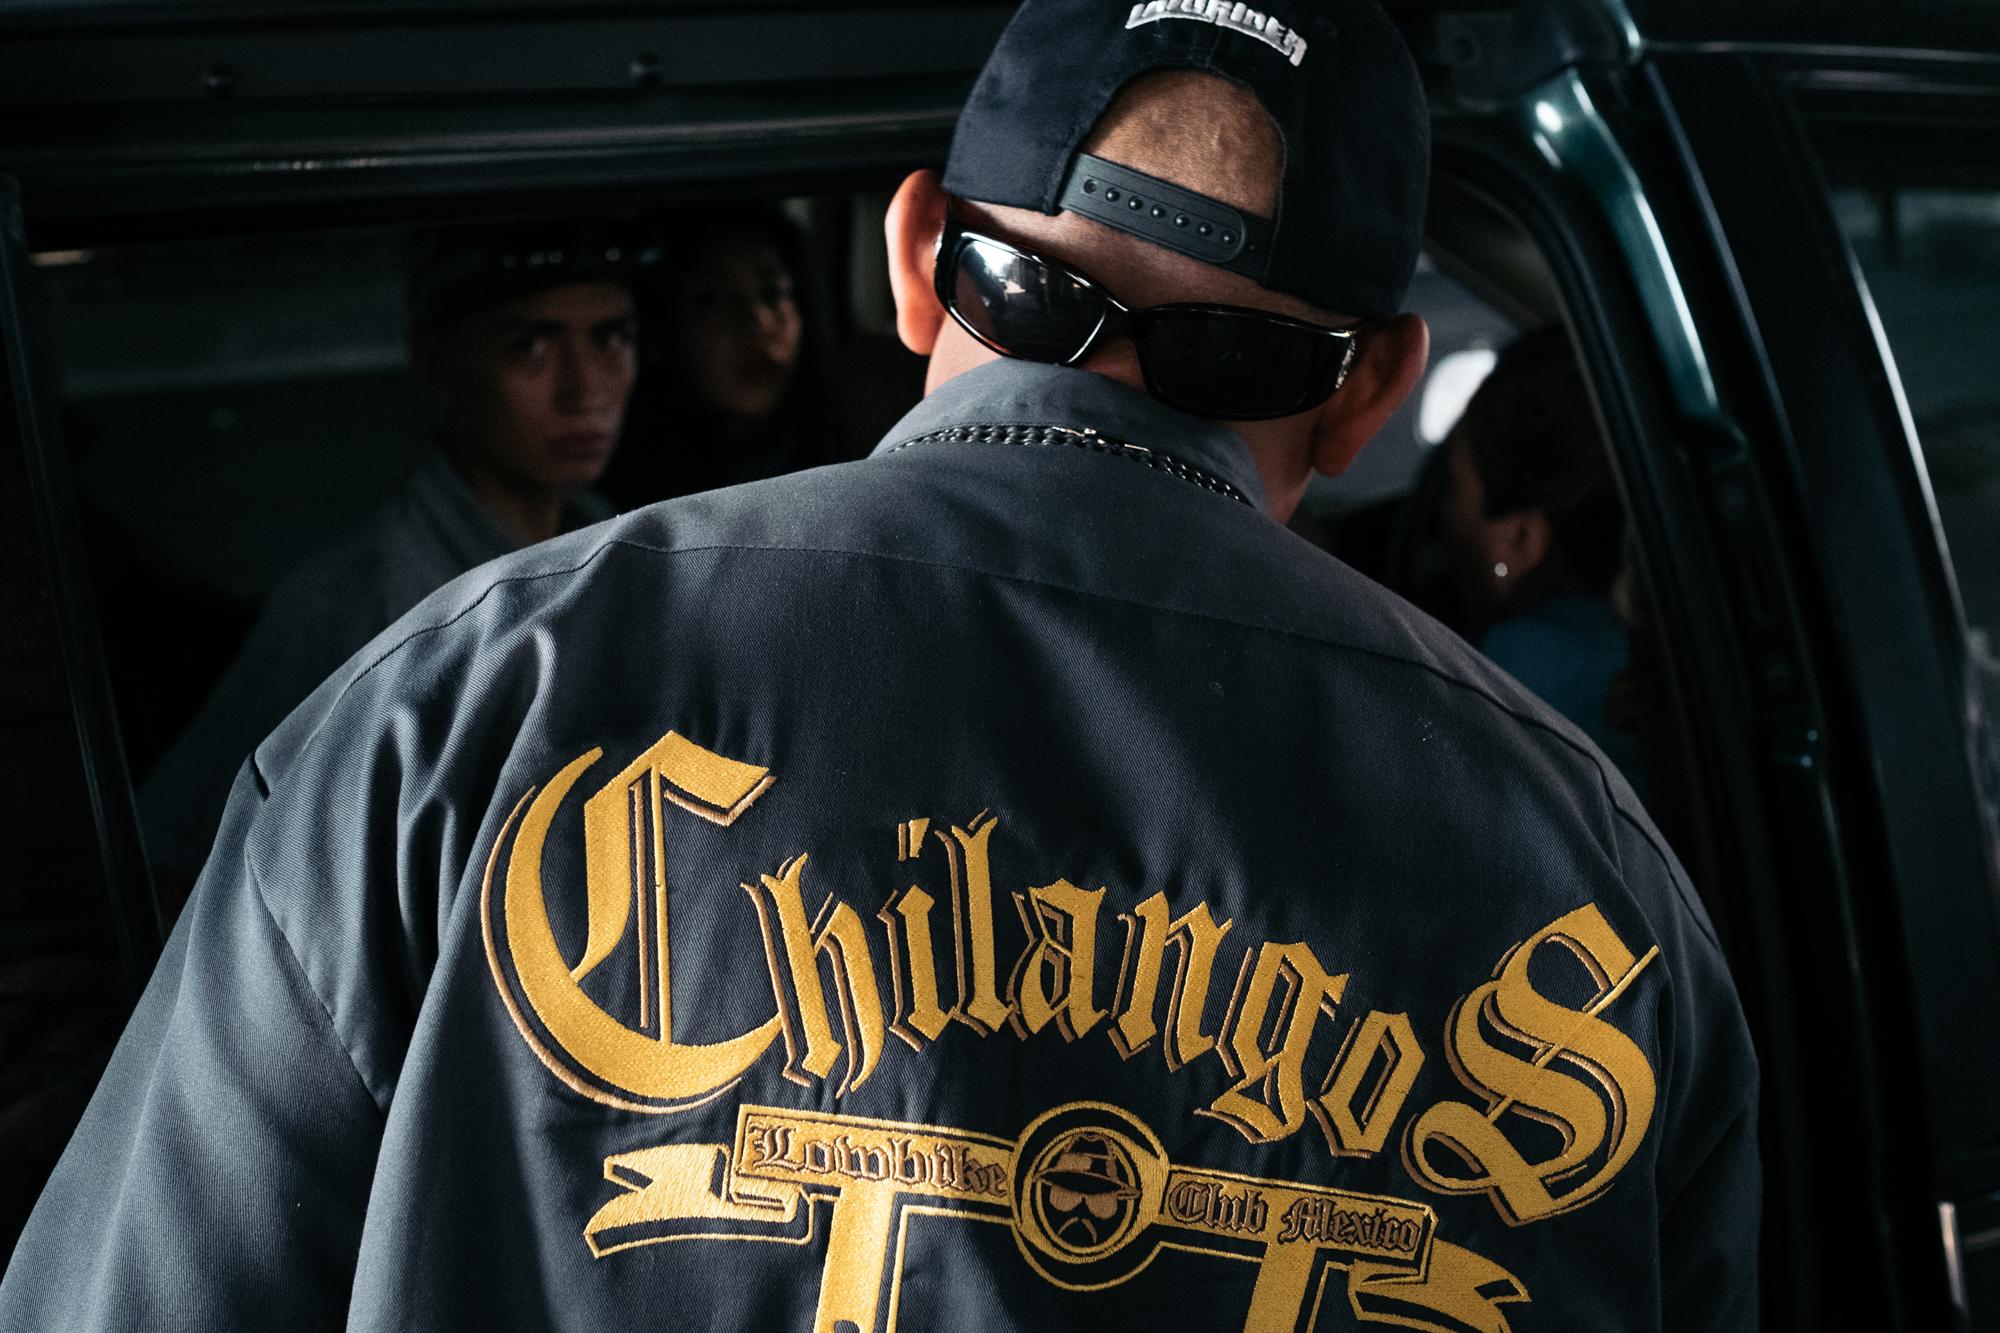 Los Chilangos -  The Chilangos Lowbike Club exists since 2016. It was...